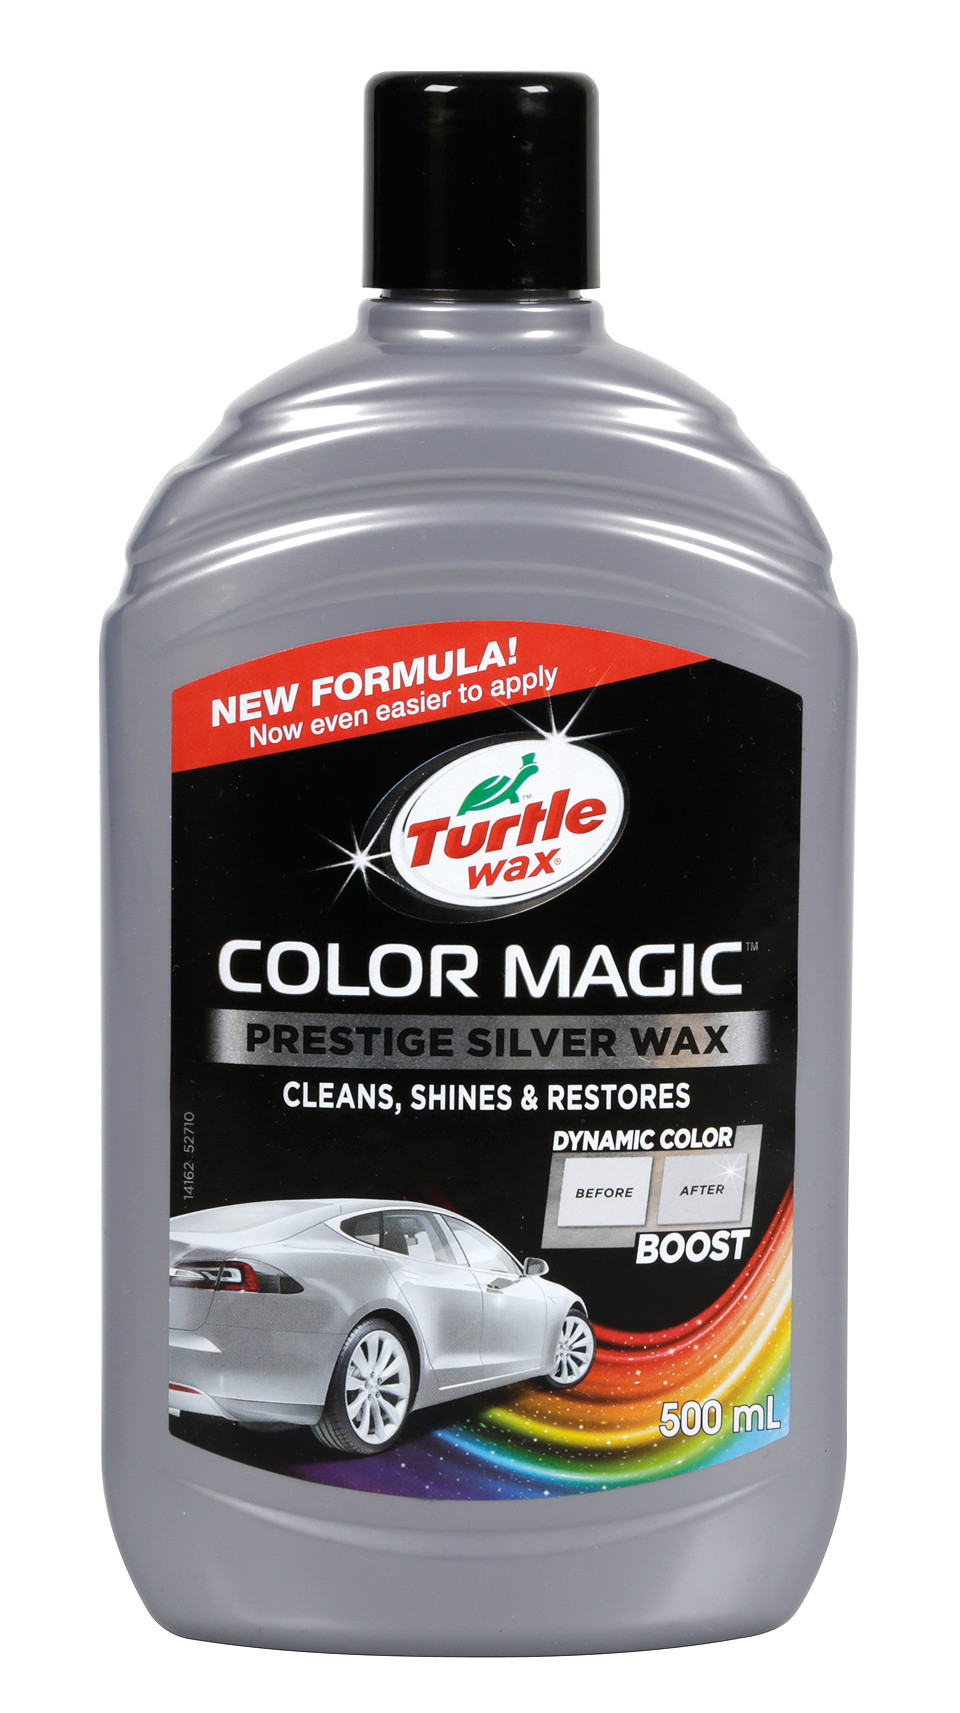 Turtle wax Color Magic car polishing paste 500 ml - Silver thumb